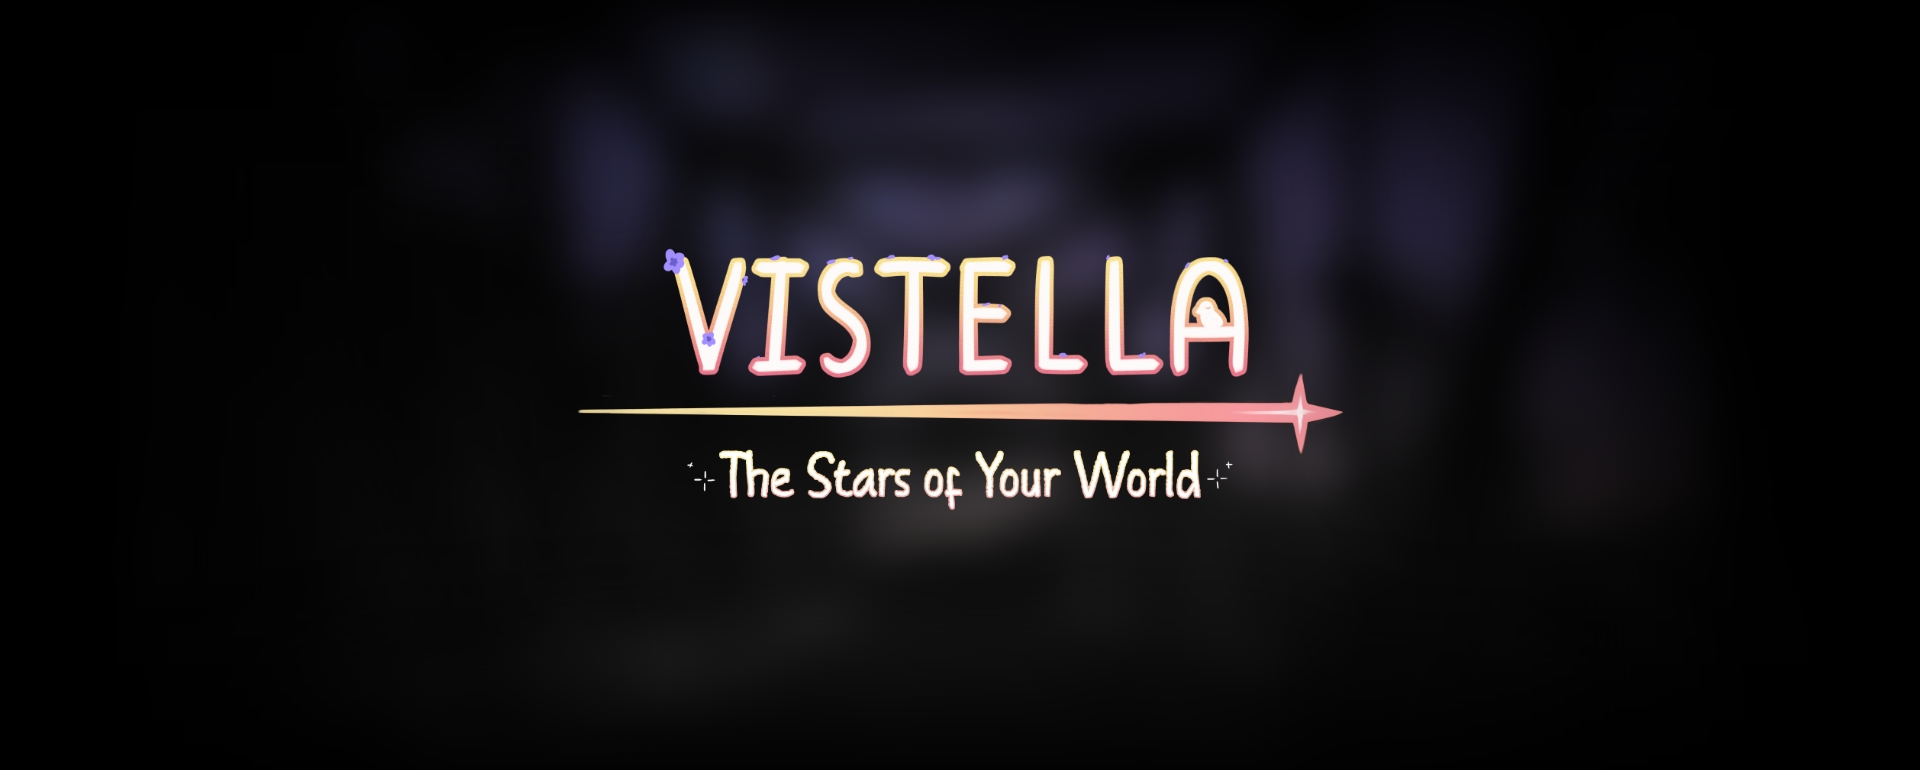 Vistella: The Stars of Your World